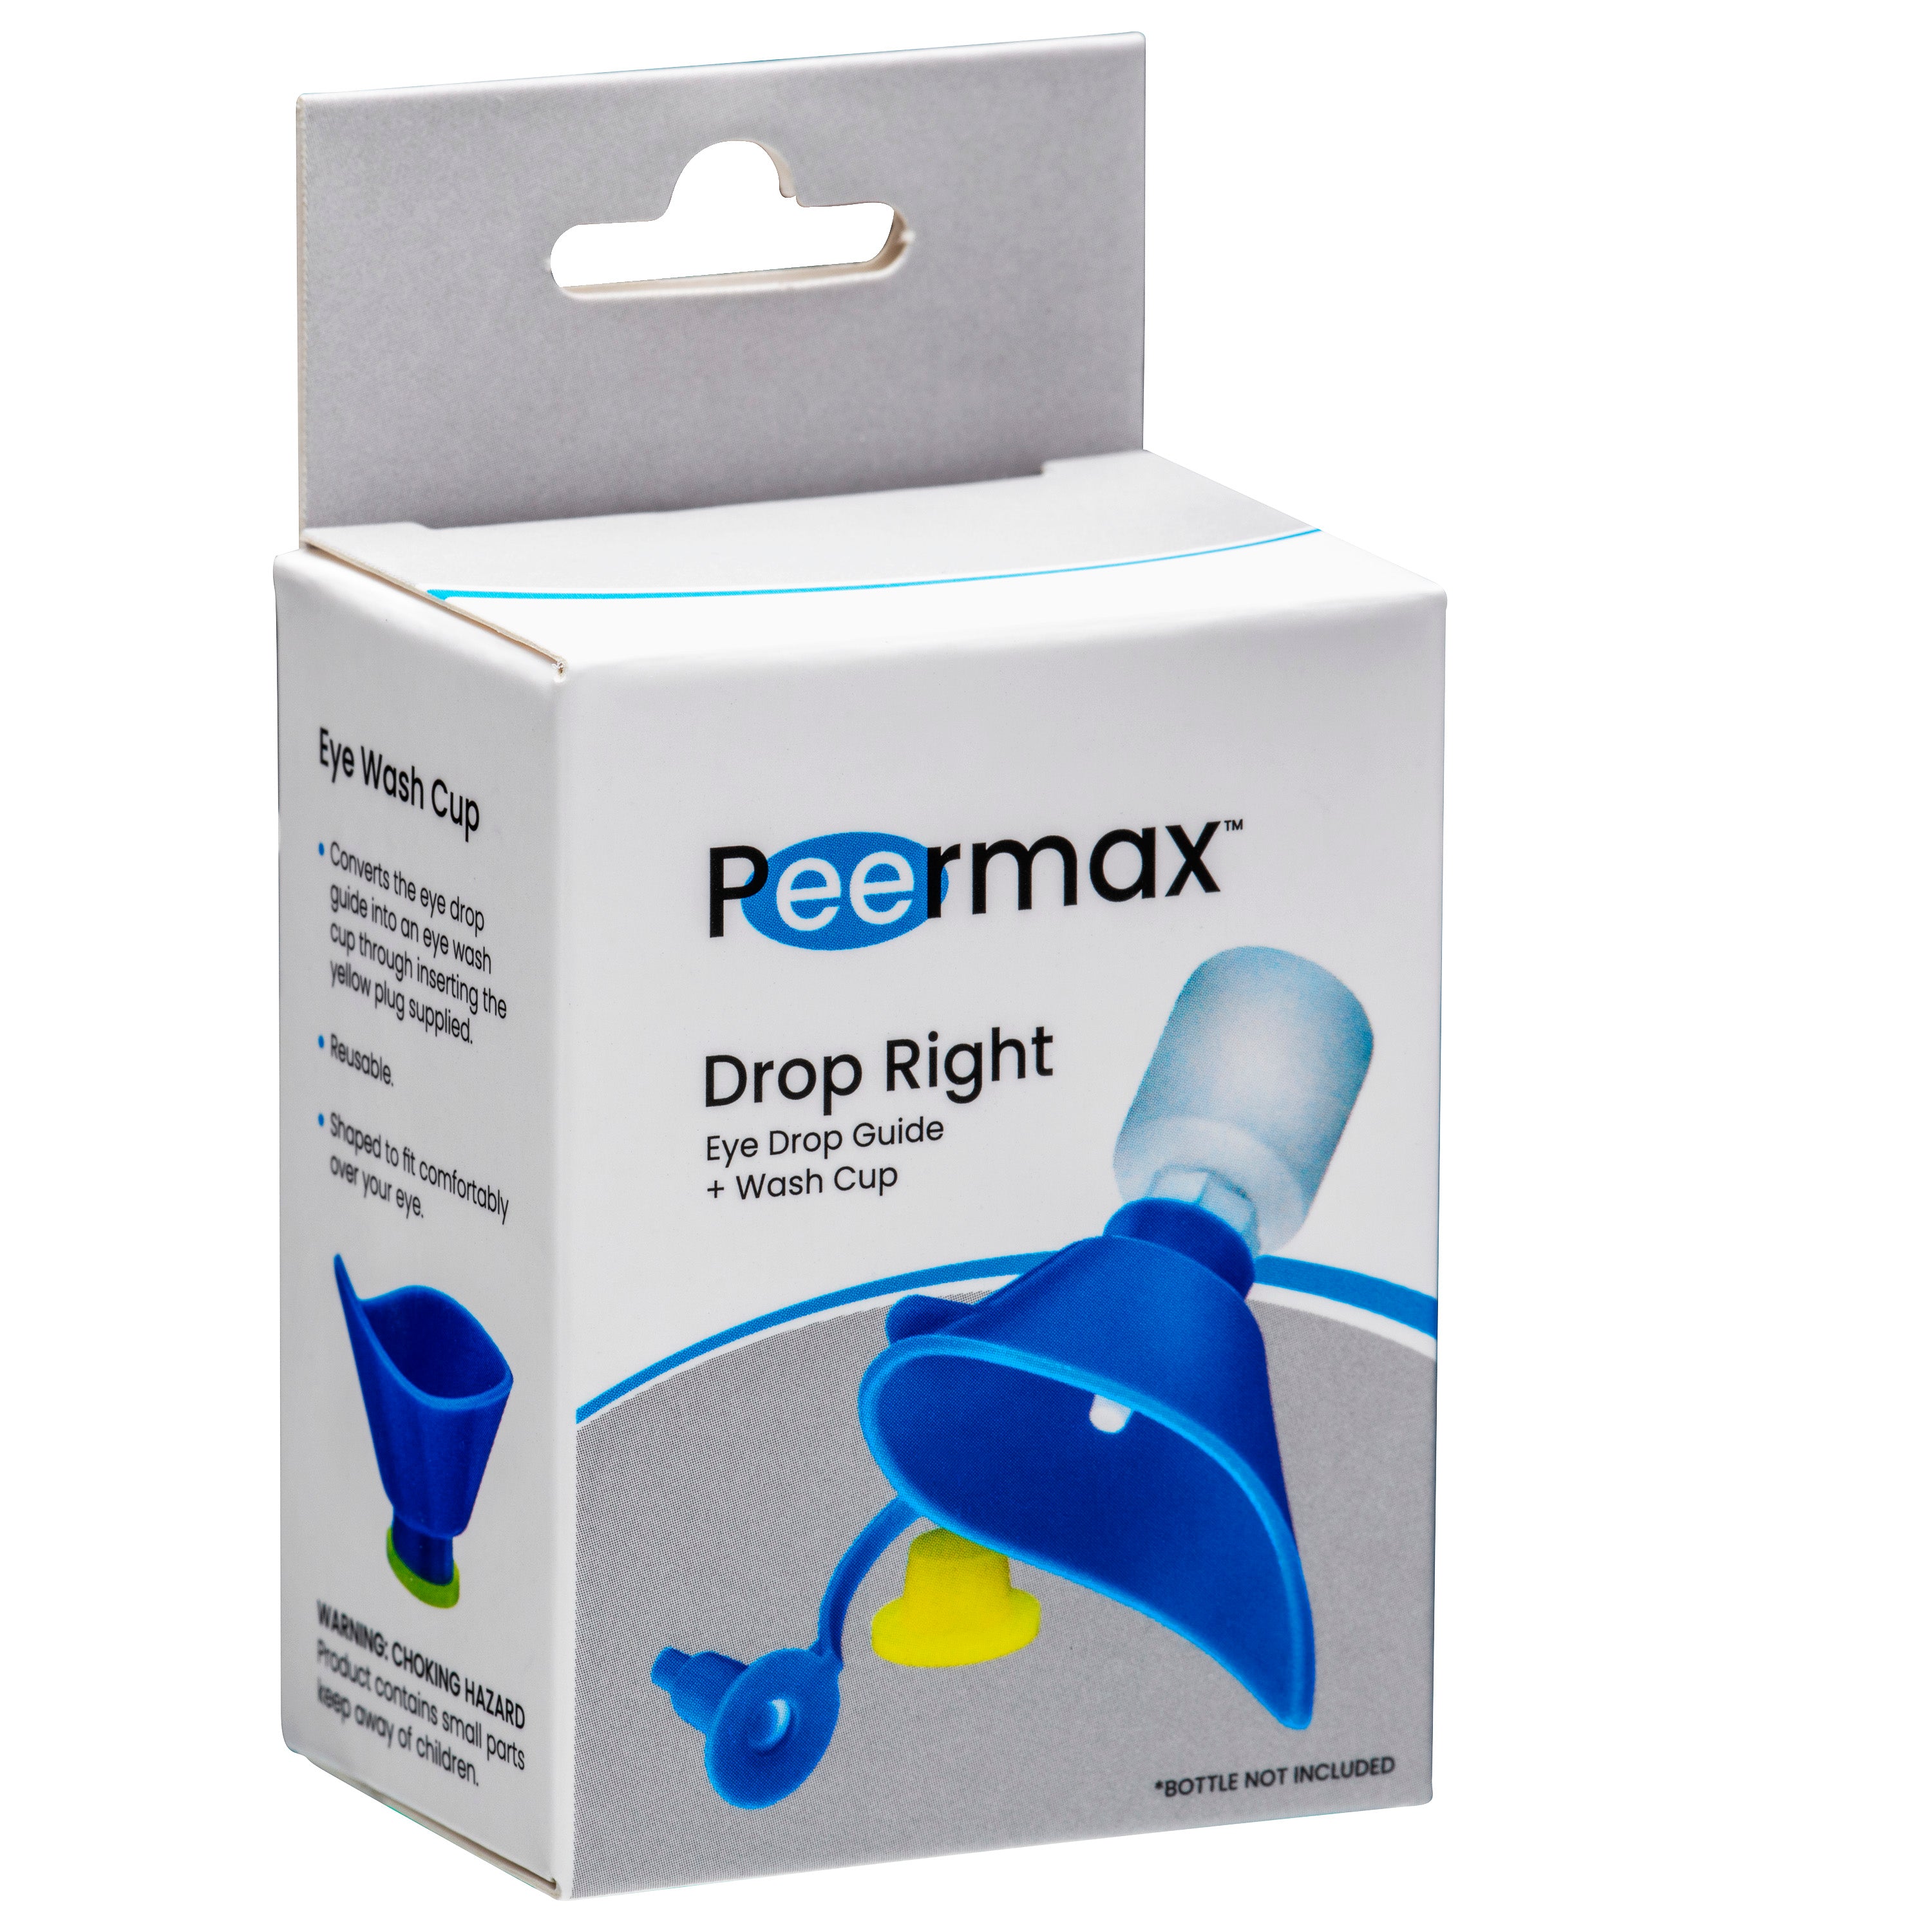 Peermax Drop Right 2 in 1 | Eye Drop Guide + Wash Cup